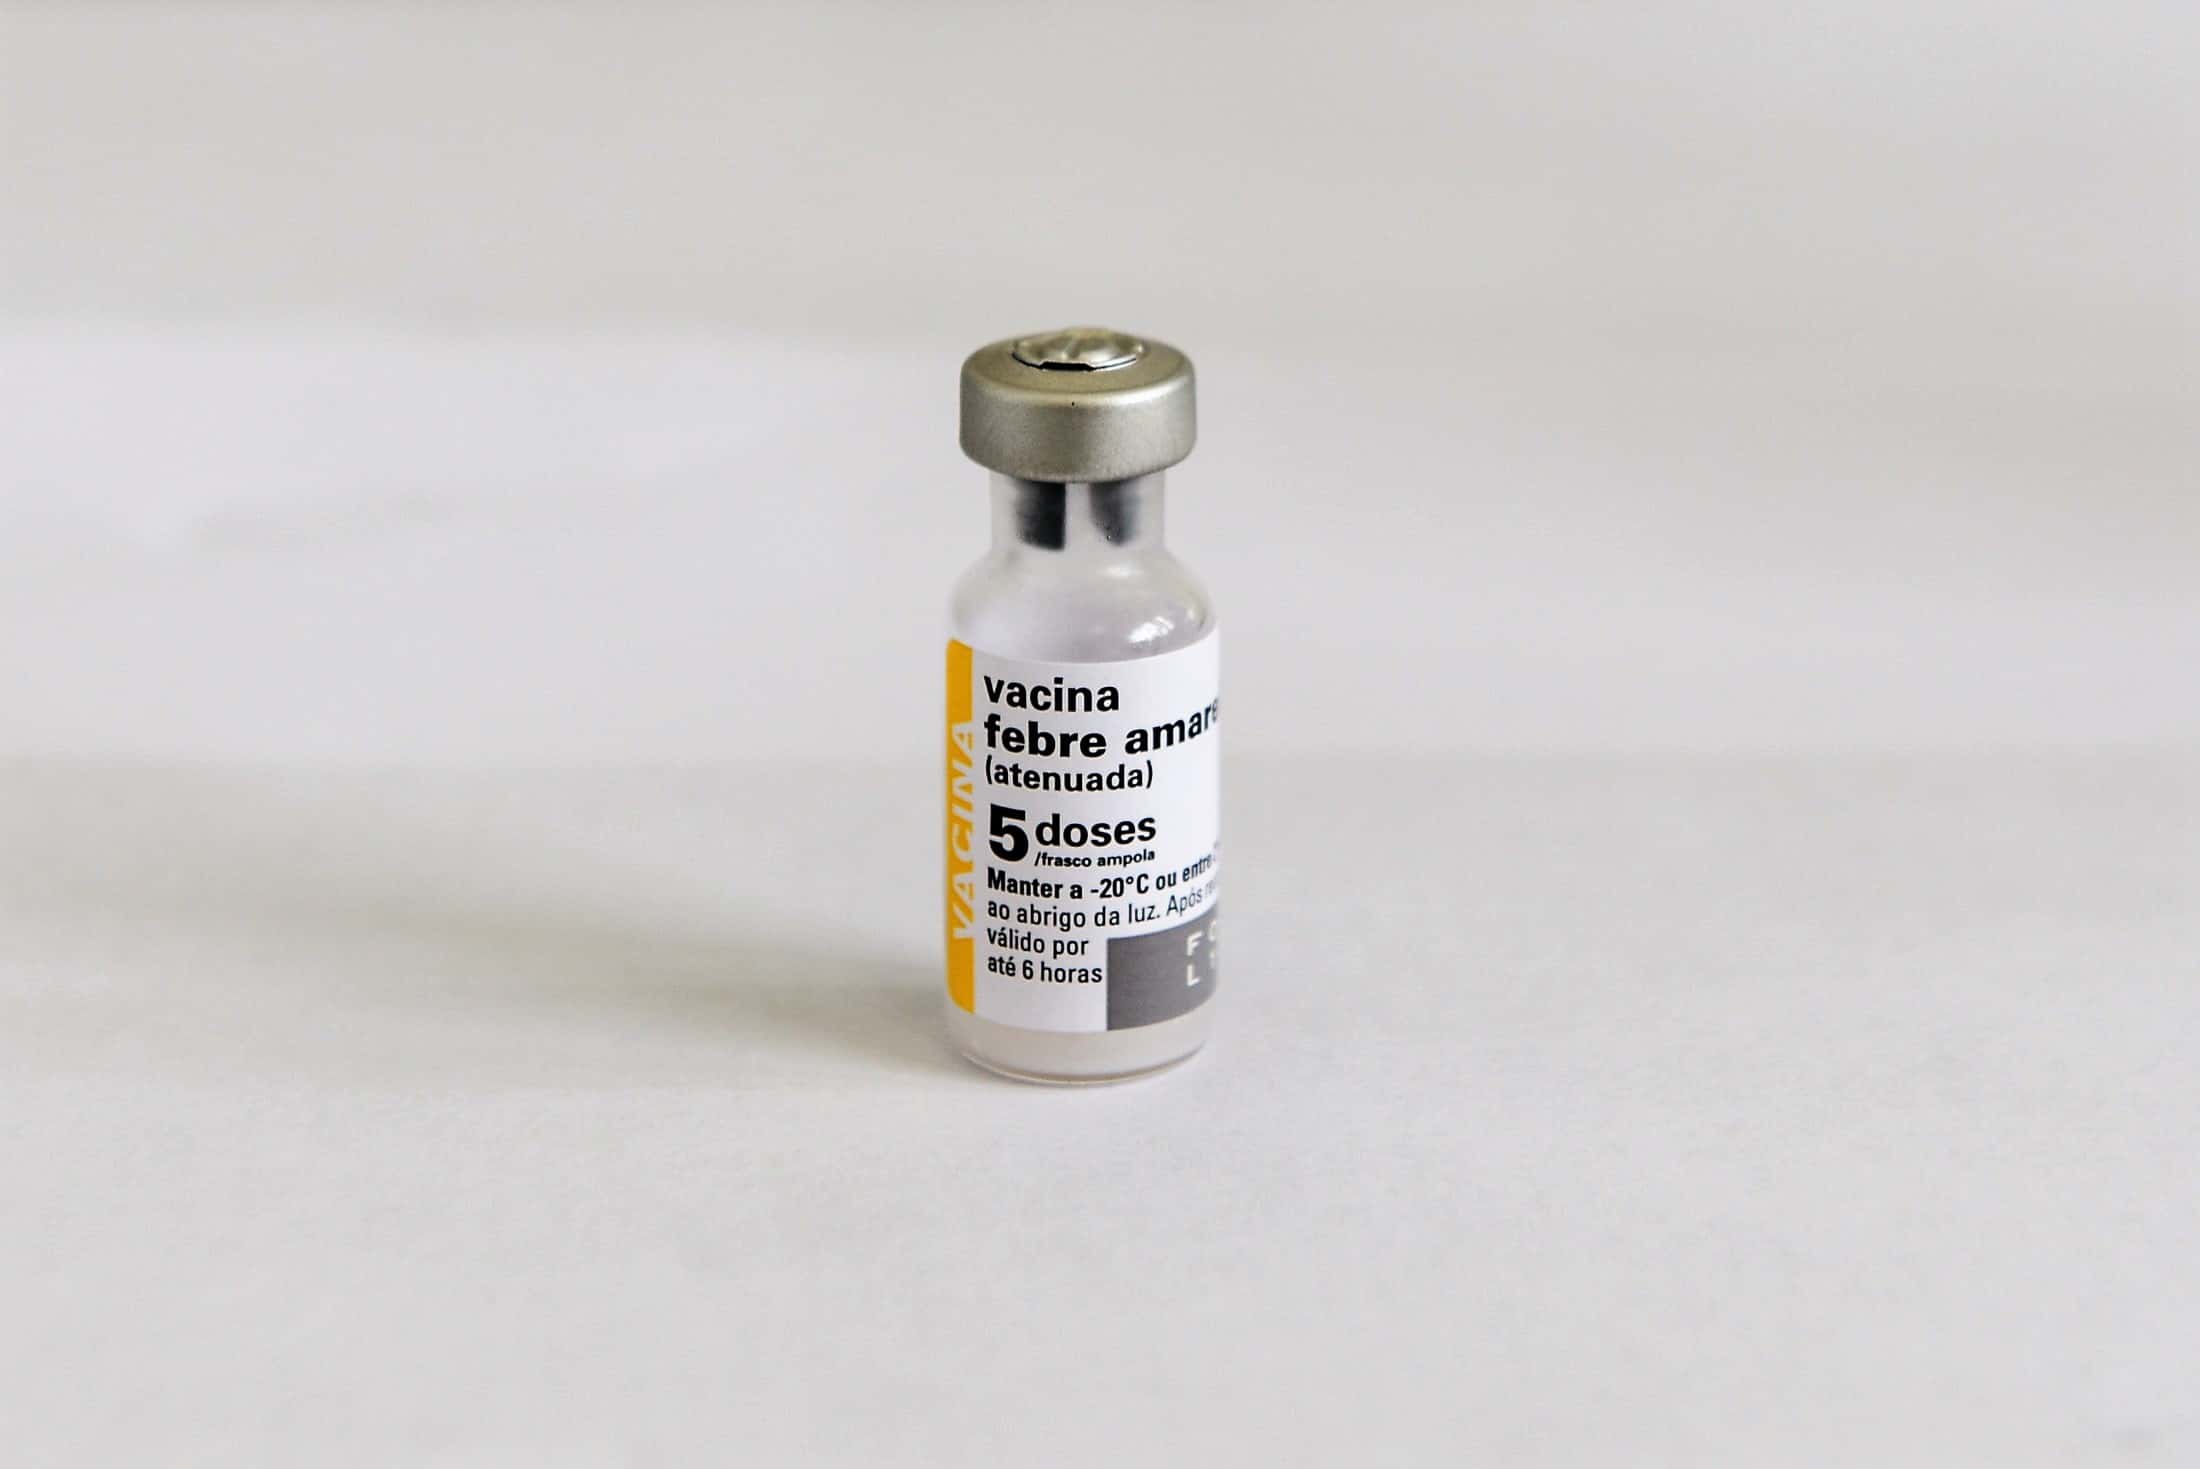 Vidro de vacina de febre amarela com tarja mostrando dose atenuada